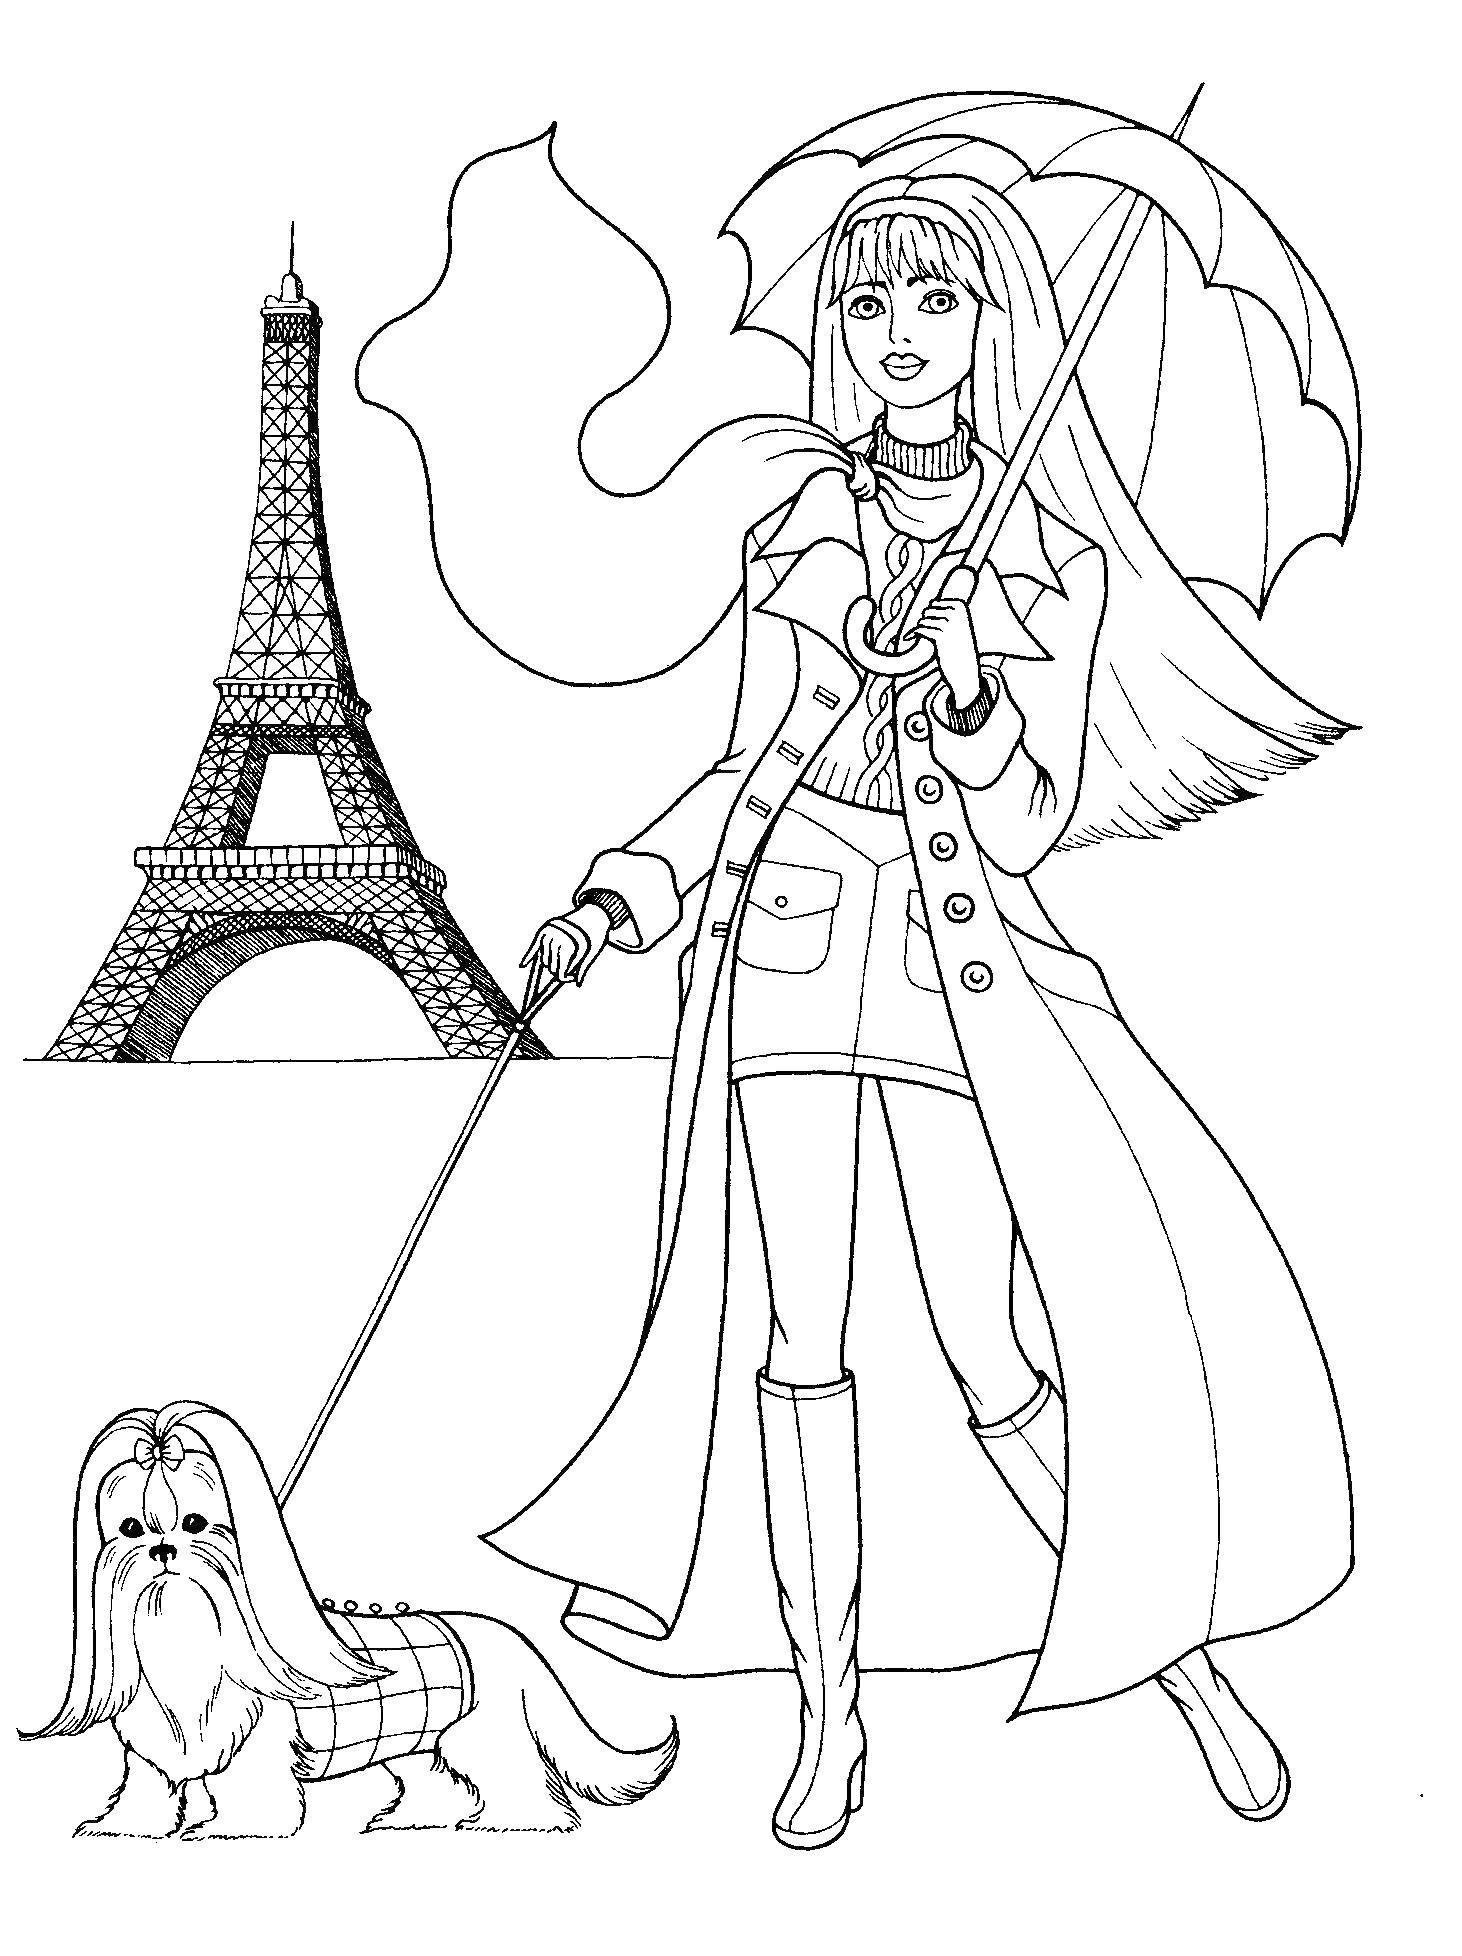 Coloring Barbie in Paris. Category Princess. Tags:  Barbie .